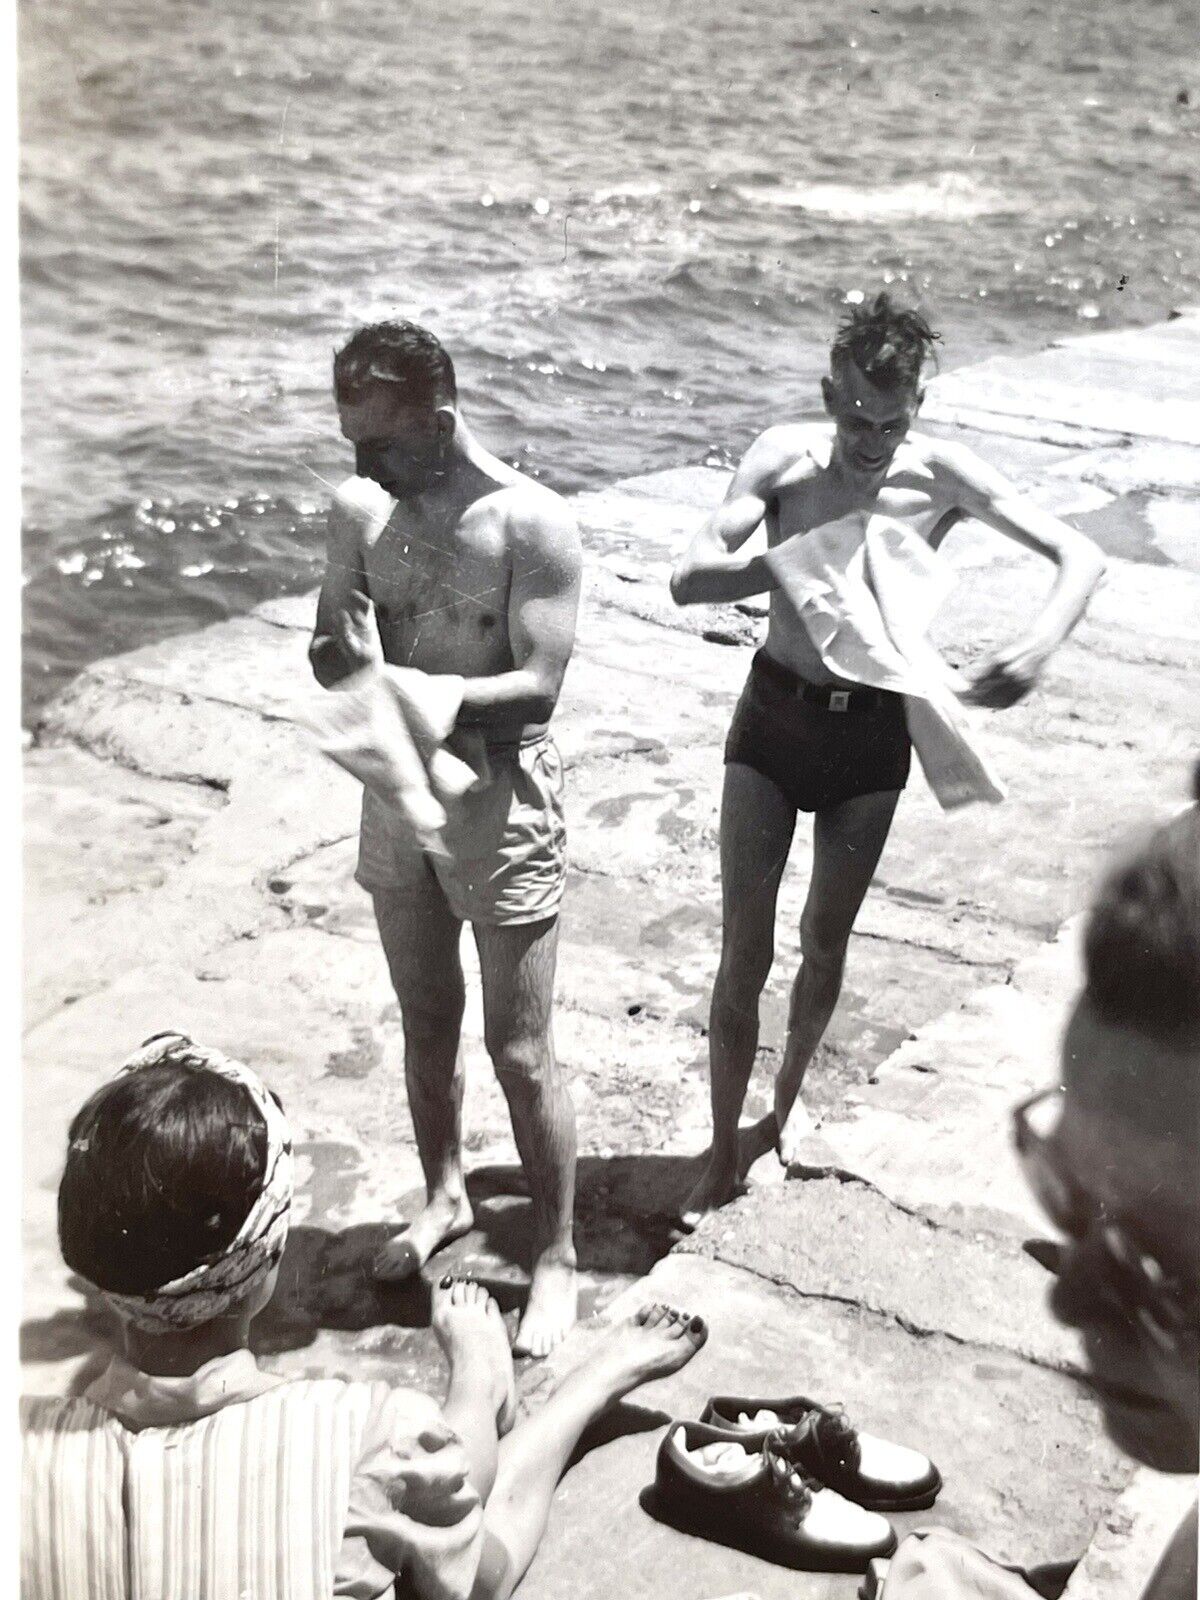 Vtg Photo 1940s Fit Shirtless Muscular Men Toweling Off Gay Int Shirtless